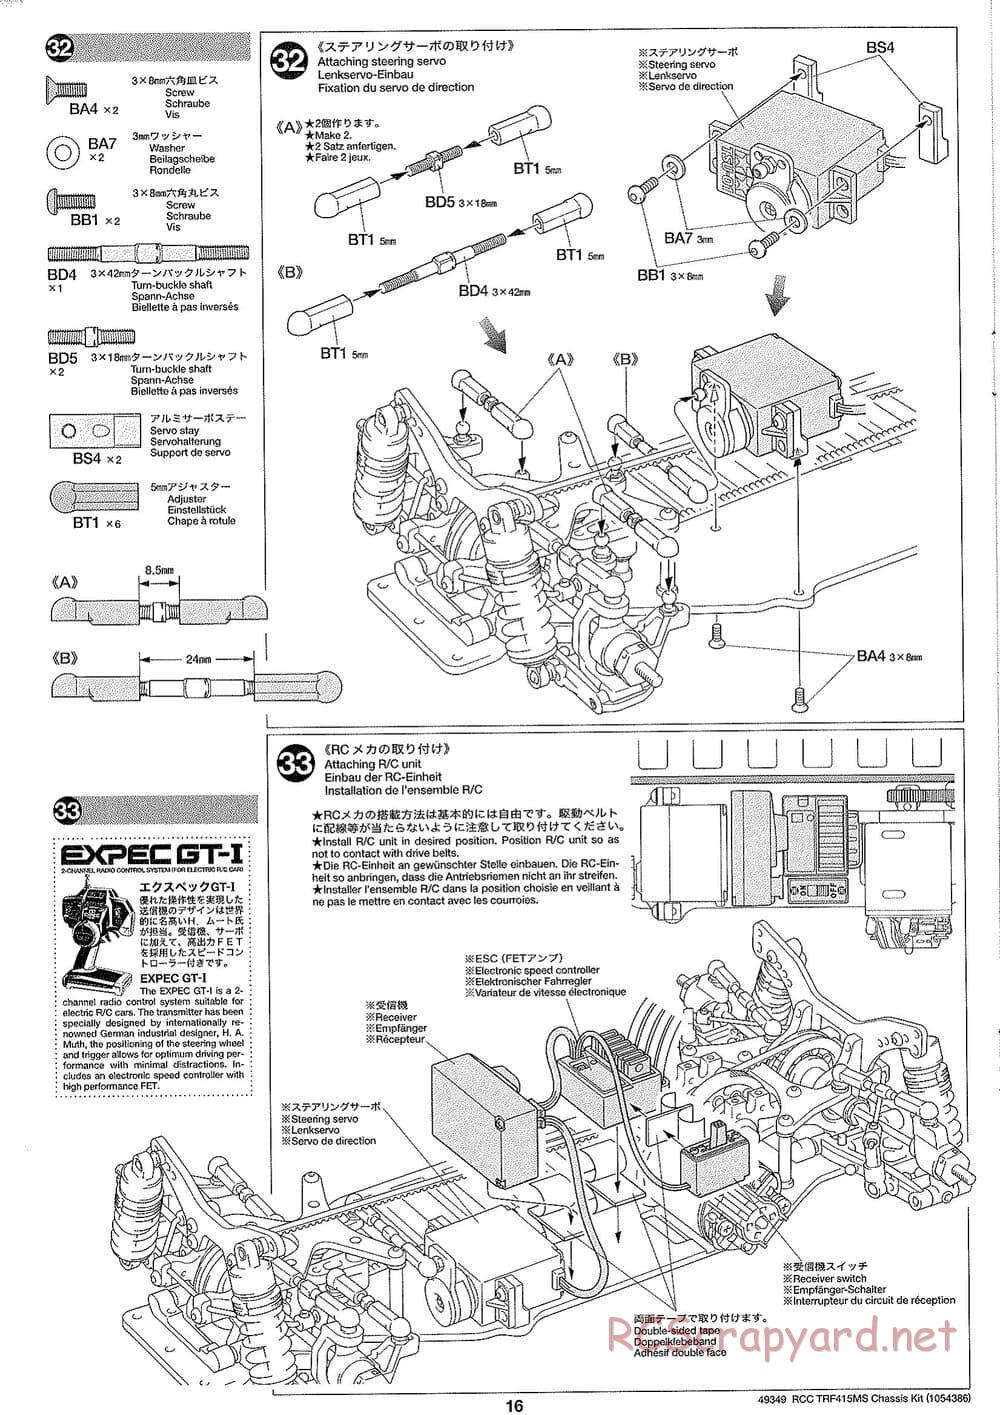 Tamiya - TRF415-MS Chassis - Manual - Page 16